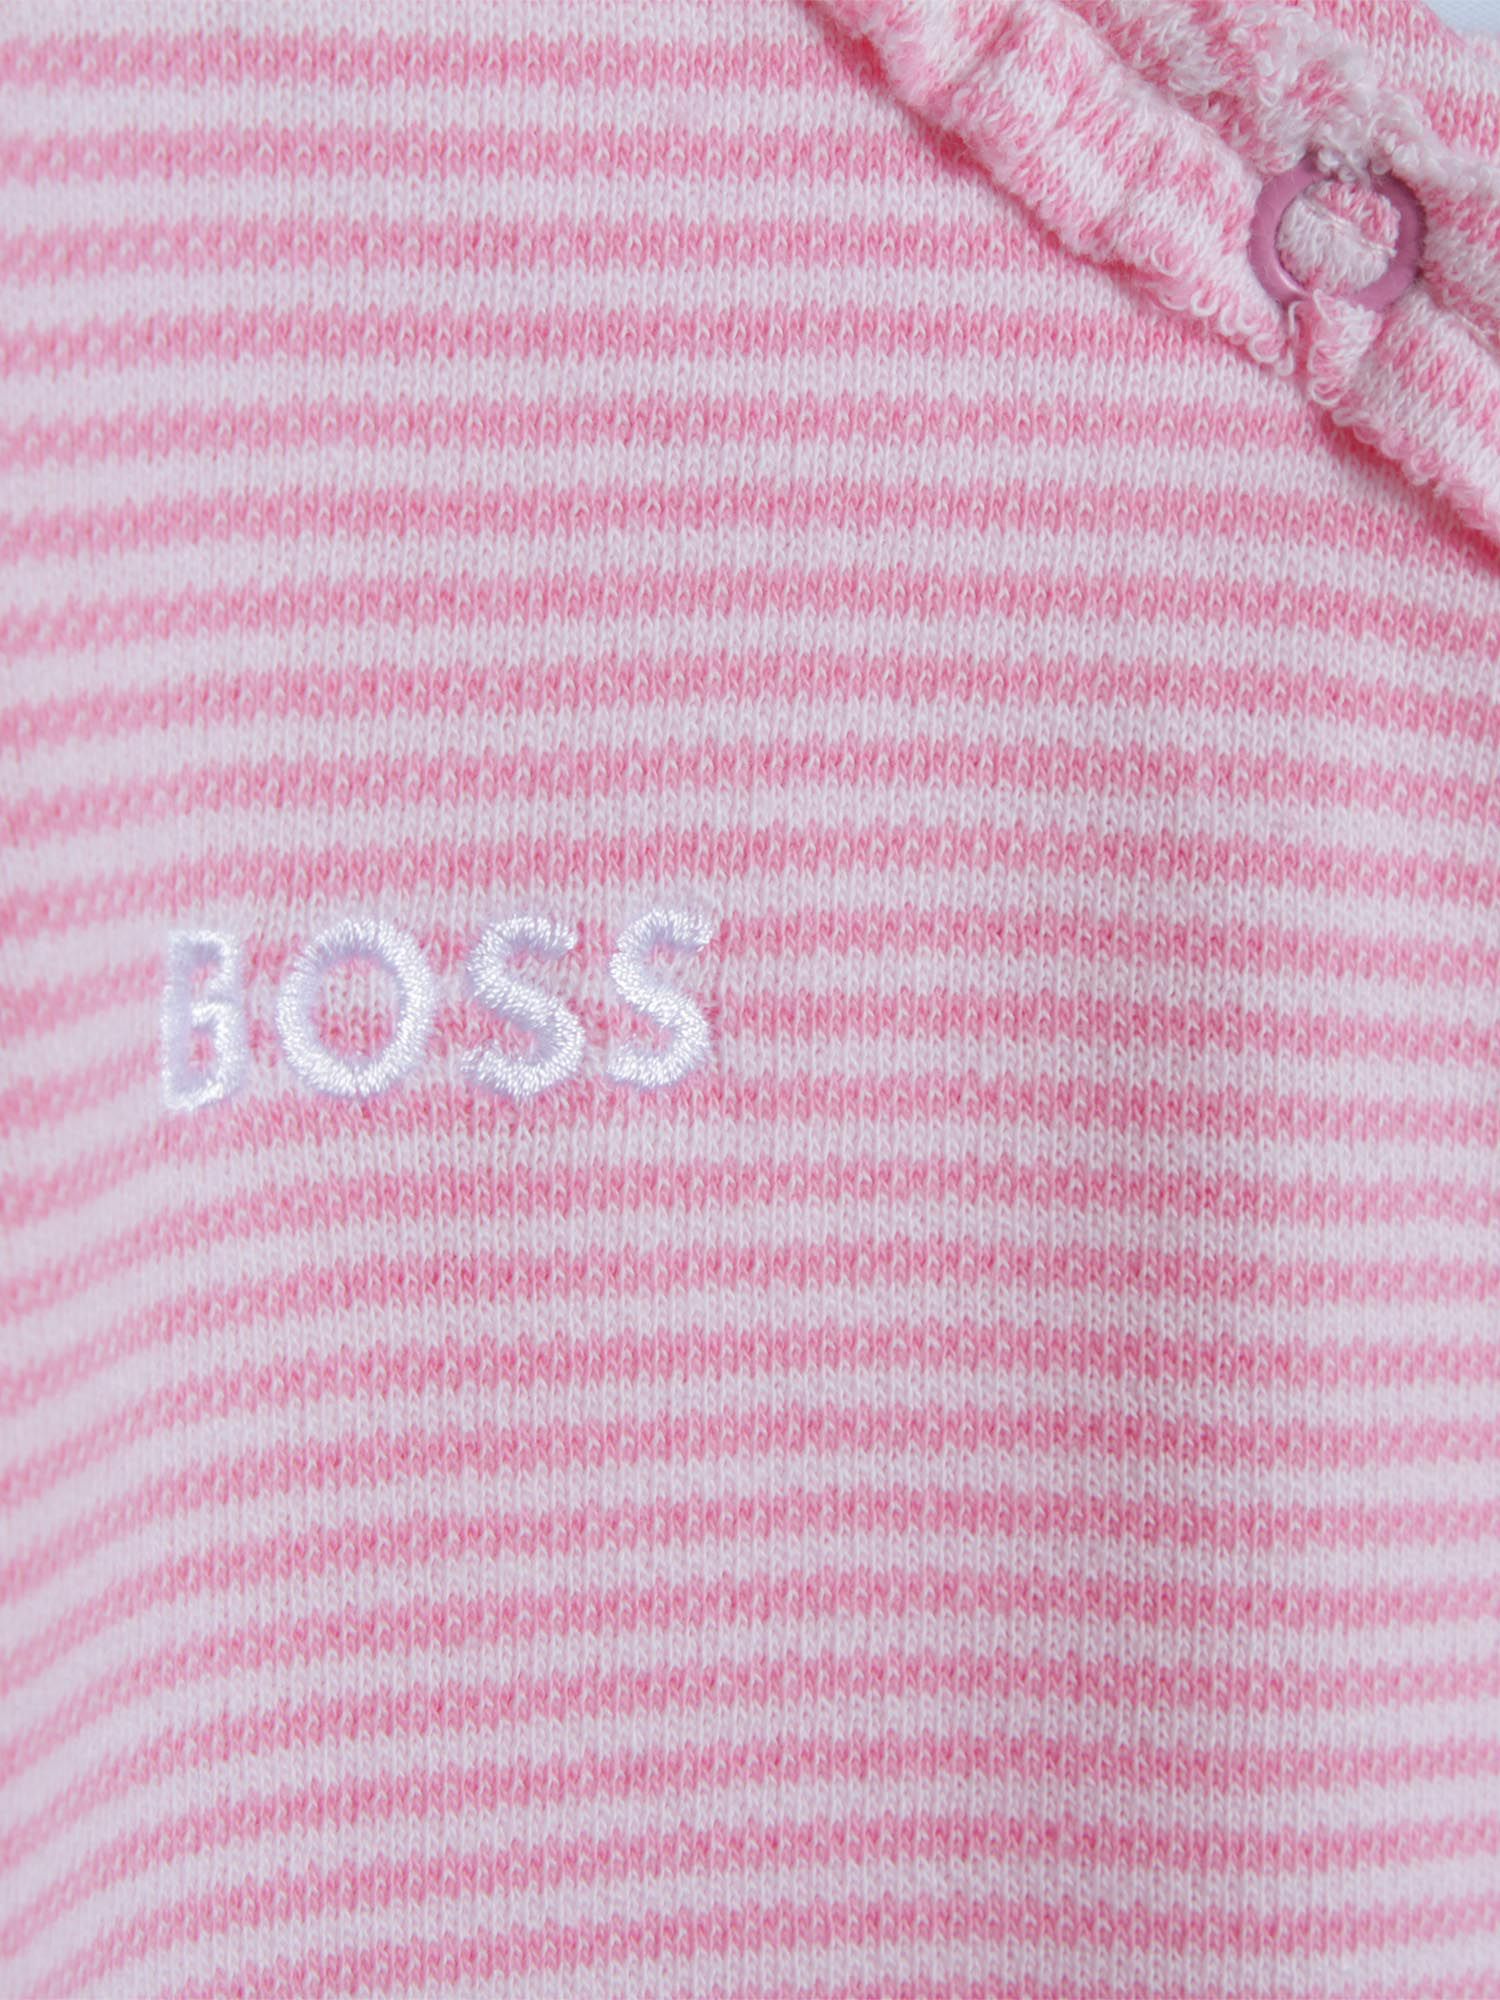 Buy HUGO BOSS  Baby's Pyjamas, Pale Pink Online at johnlewis.com